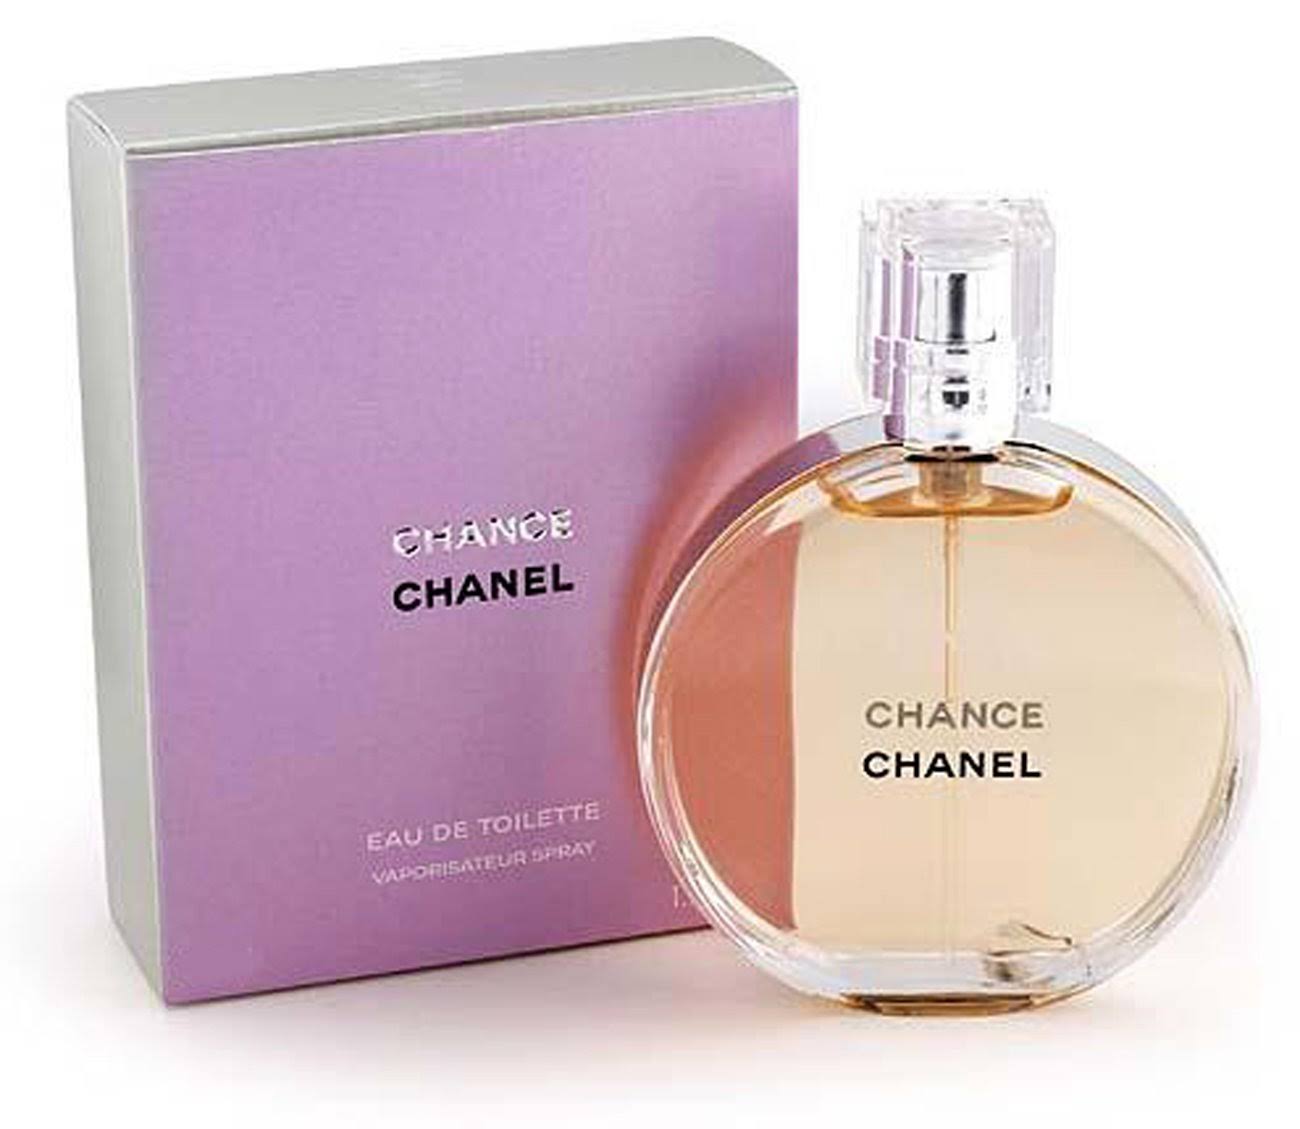 Chanel "Chance" Eau de Toilette Spray - 100ml